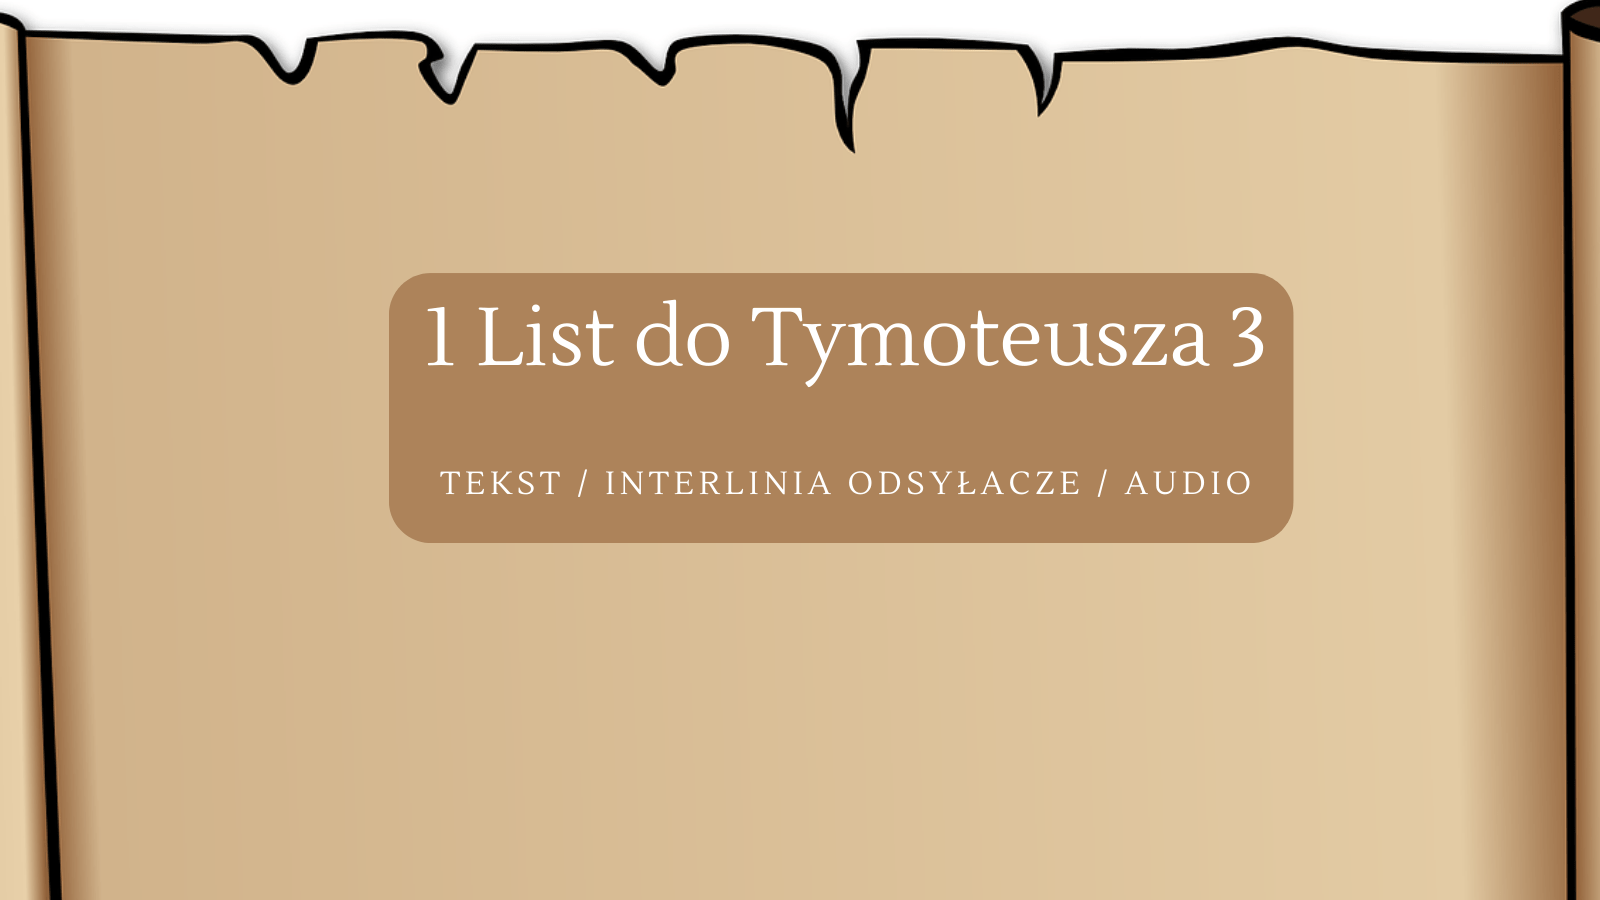 1 List do Tymoteusza 3